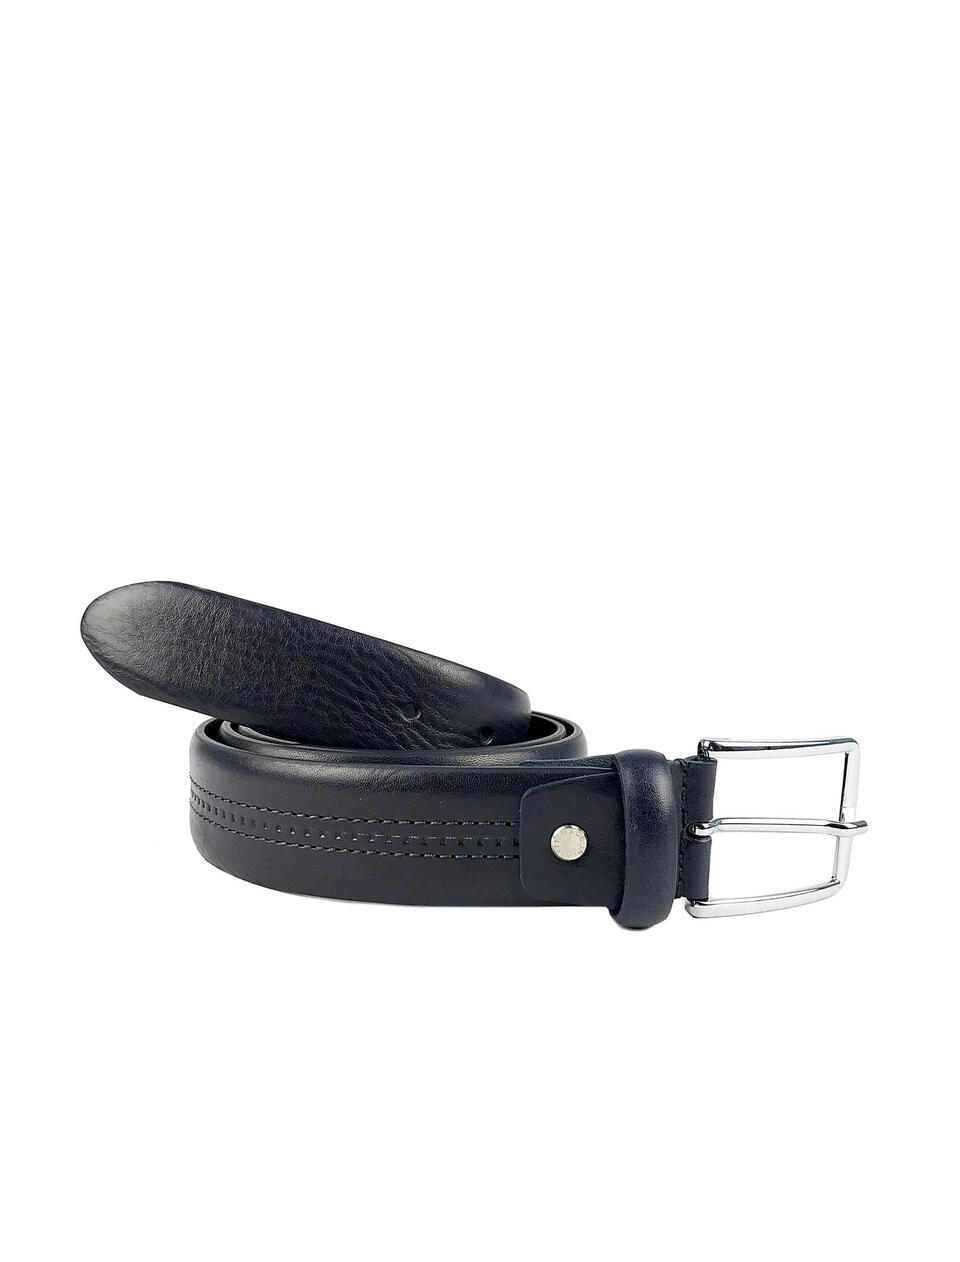 Classic leather belt with double central stitched - Men Belts | Belts  - Men Belts | BeltsCuoieria Fiorentina